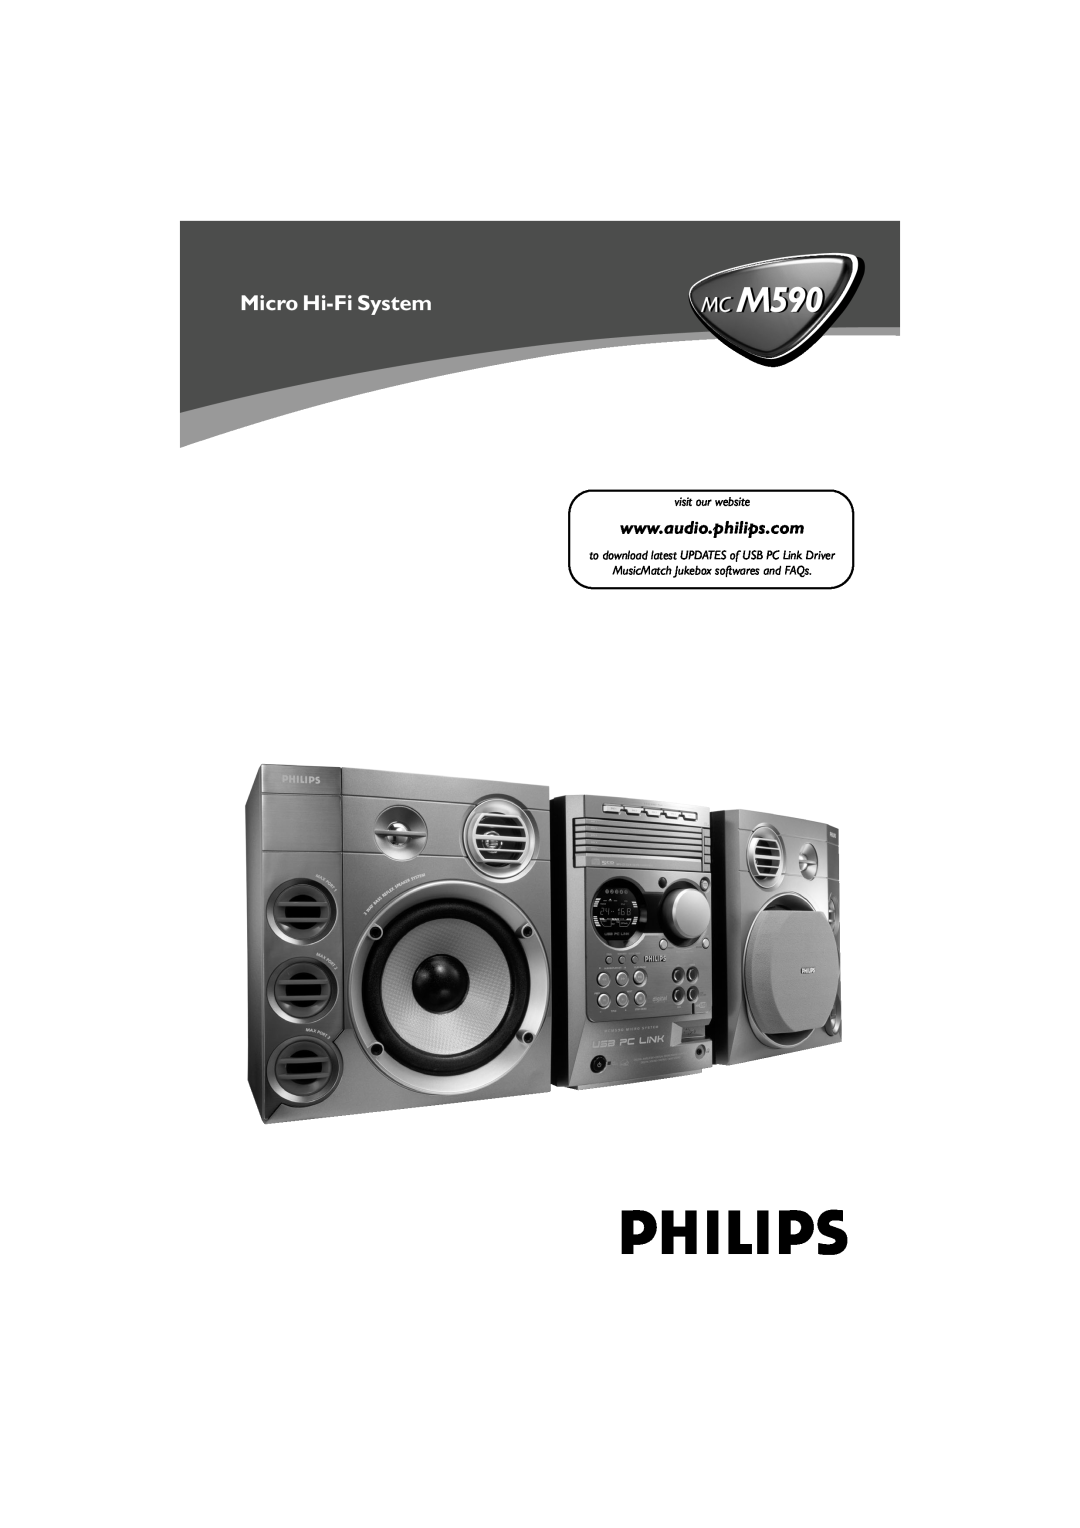 Philips pmn manual MC M590, Micro Hi-FiSystem 